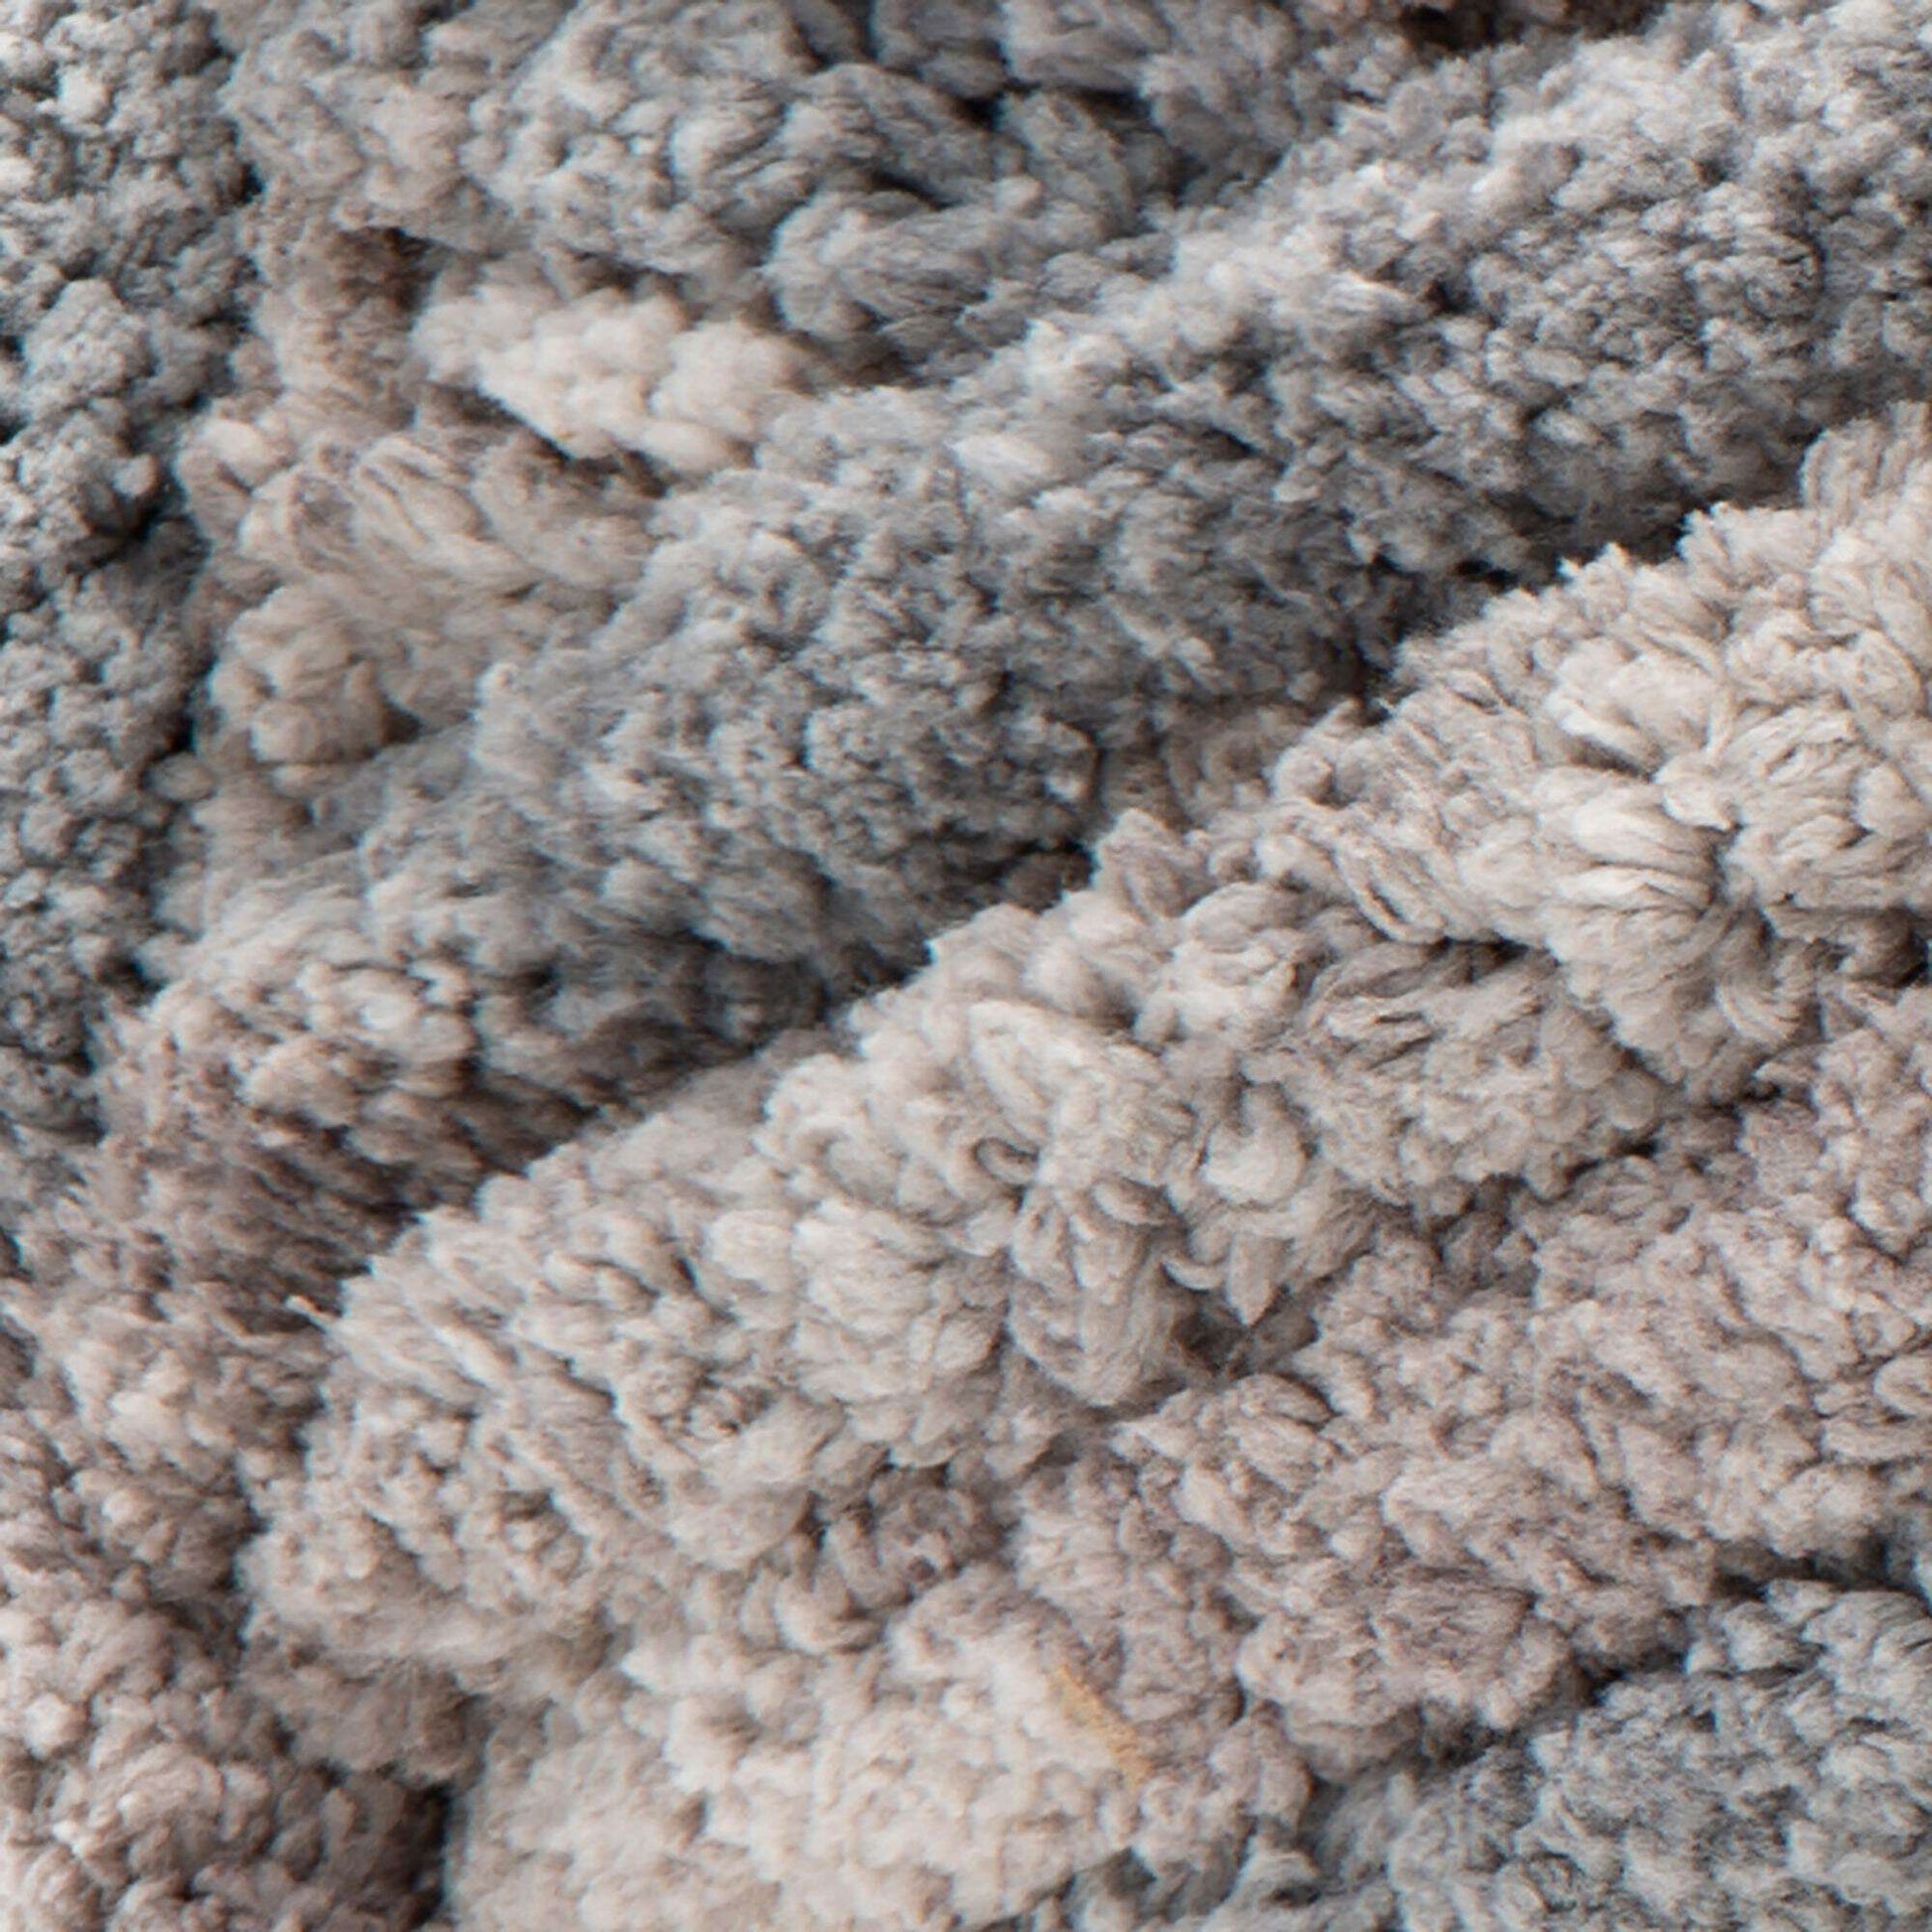 Bernat Blanket Extra Thick Clay Yarn - 1 Pack of 600g/21oz - Polyester - 7  Jumbo - Knitting, Crocheting, Crafts & Amigurumi, Chunky Chenille Yarn